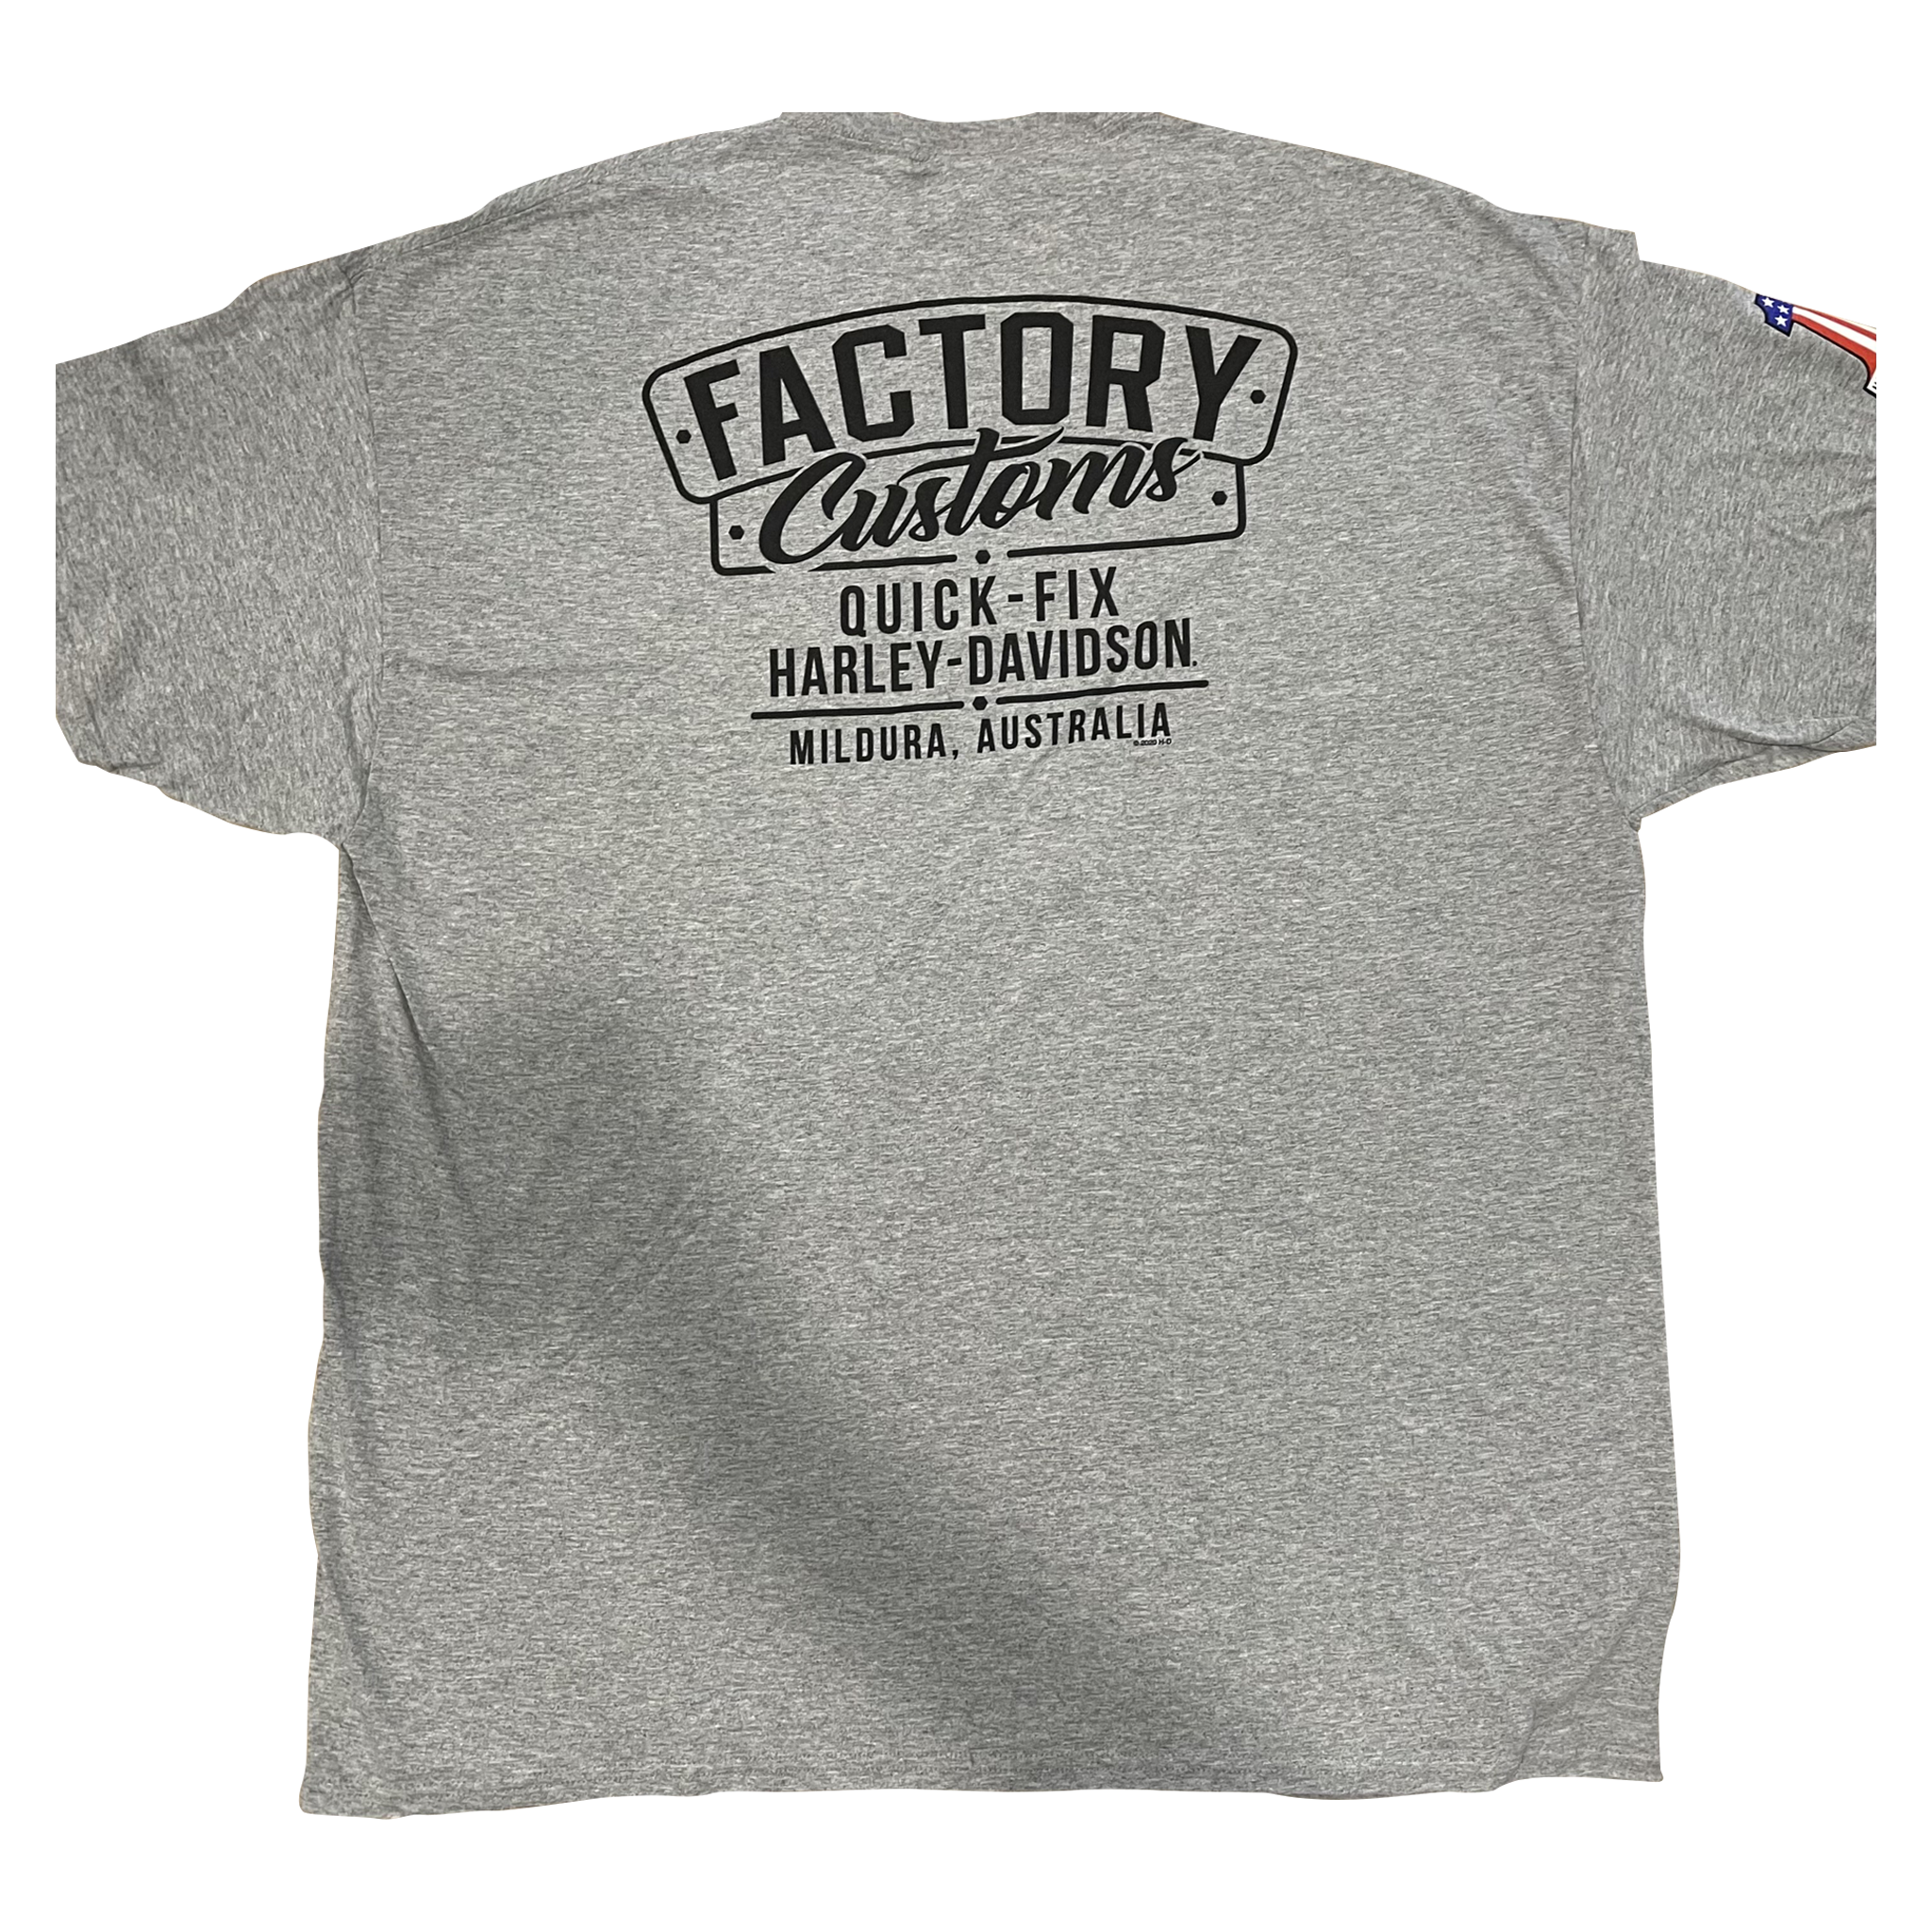 Quick-Fix Harley-Davidson Factory Custom Tee - Grey